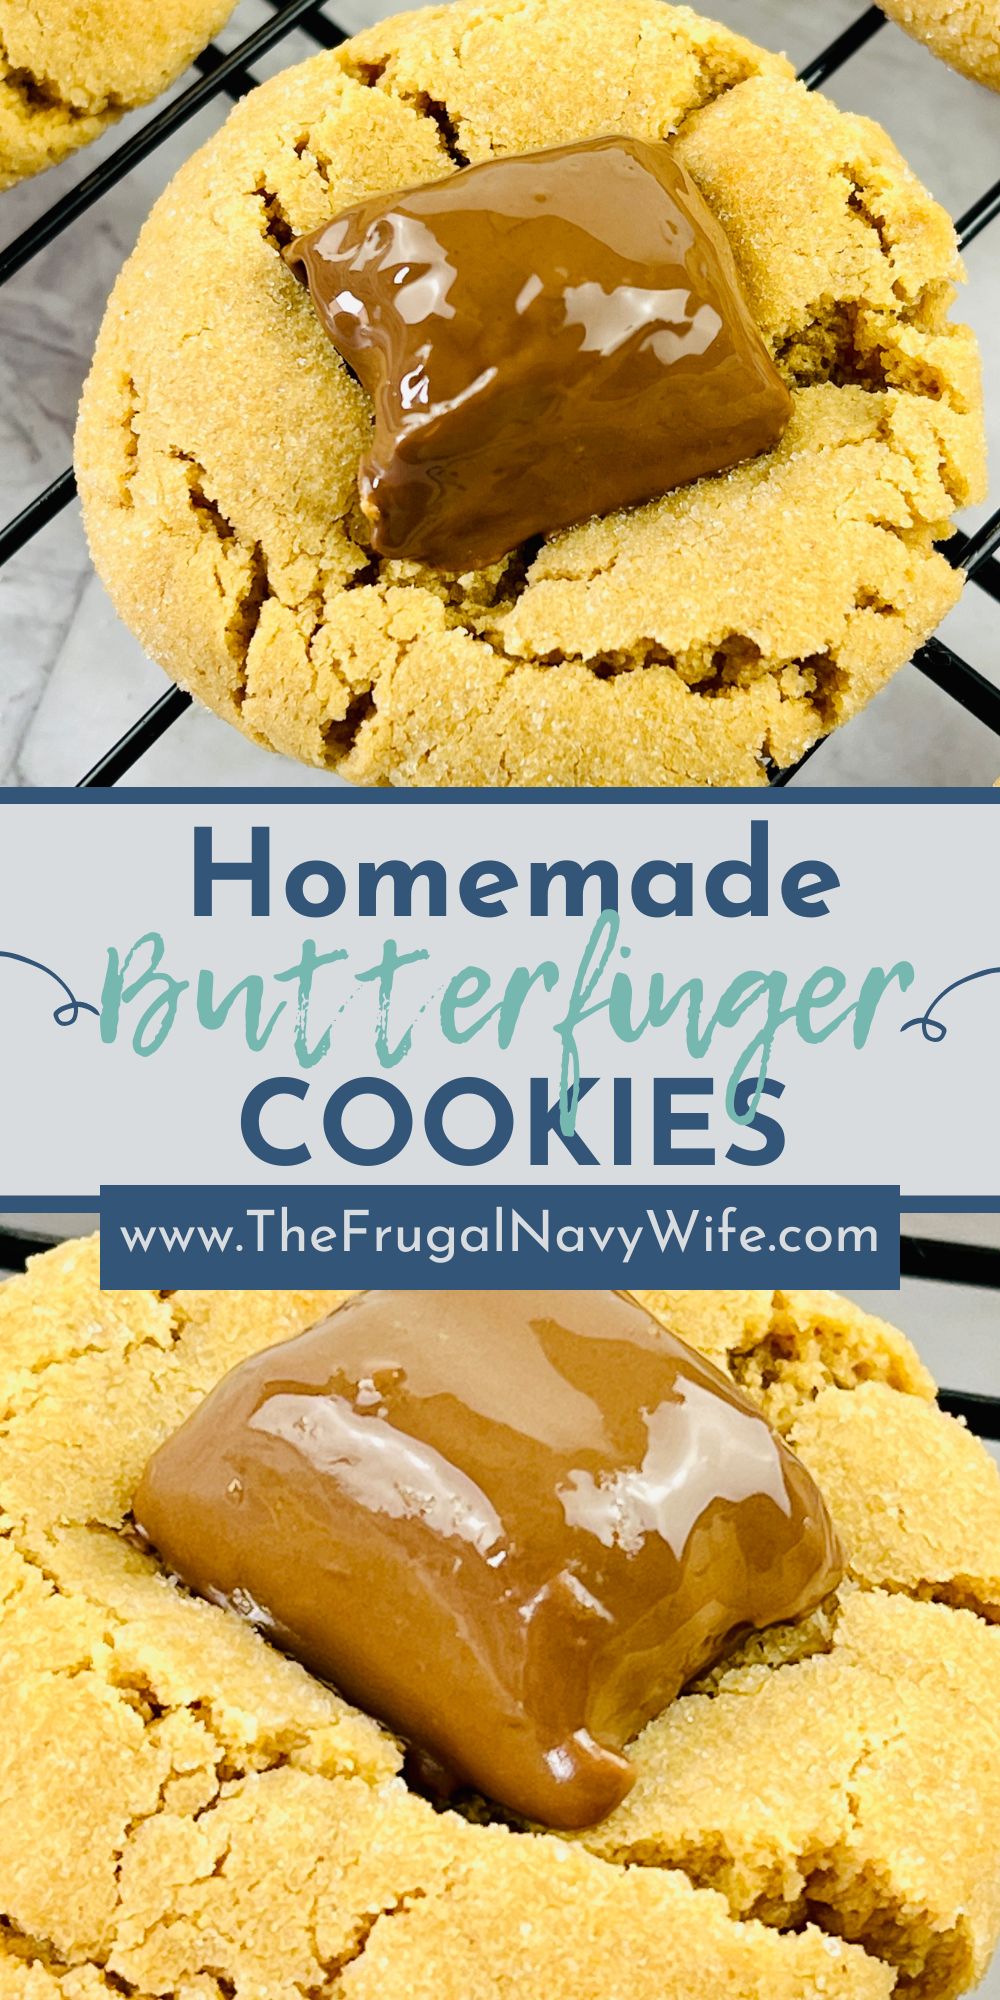 https://www.thefrugalnavywife.com/wp-content/uploads/2017/11/Homemade-Butterfinger-Cookies-1.jpg